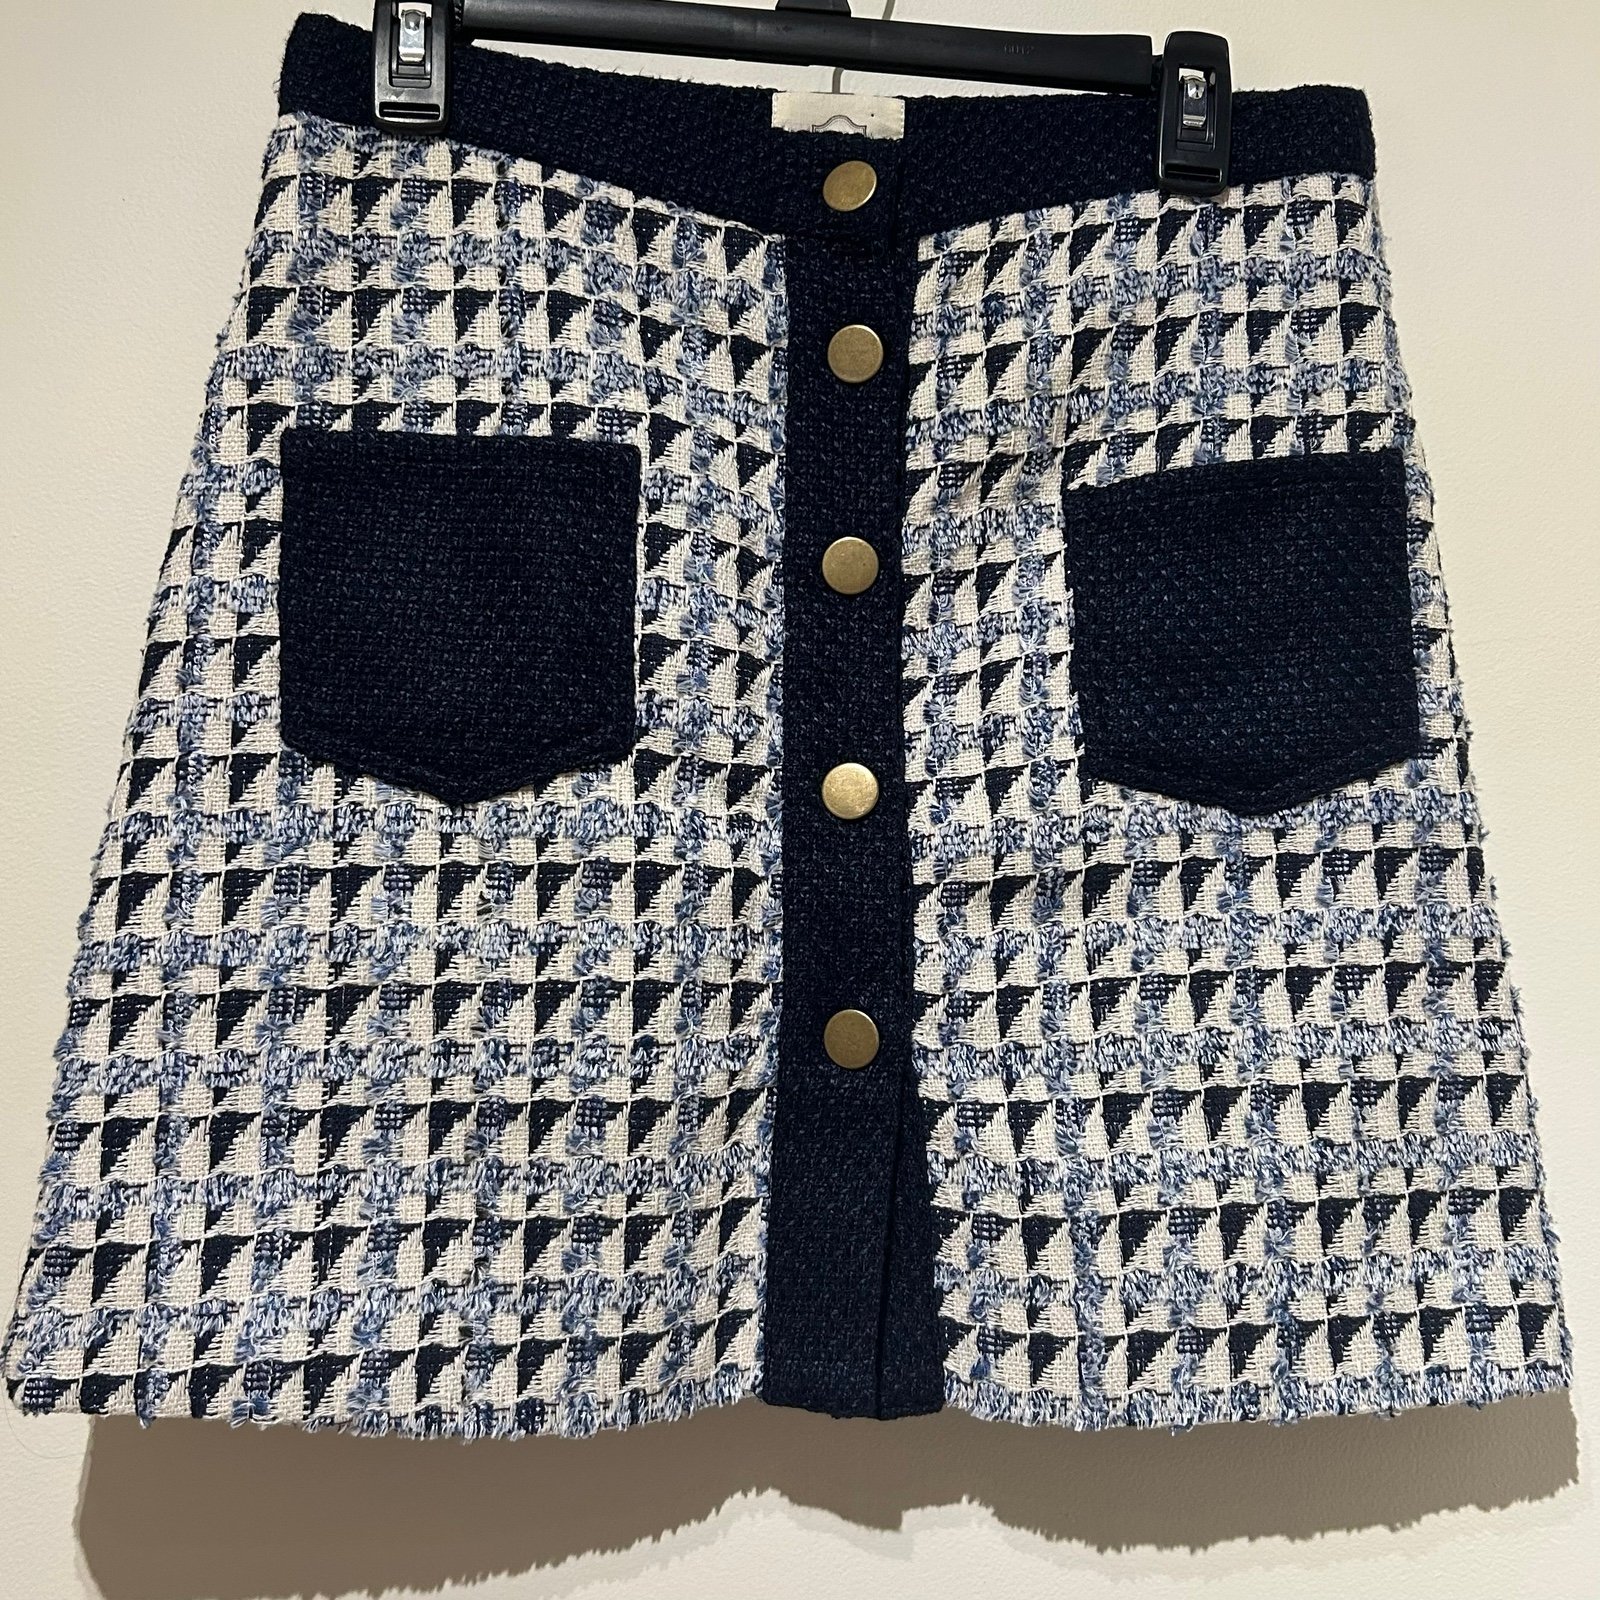 Wholesale price Arthur Jane Claire Boutique Tweed Skirt